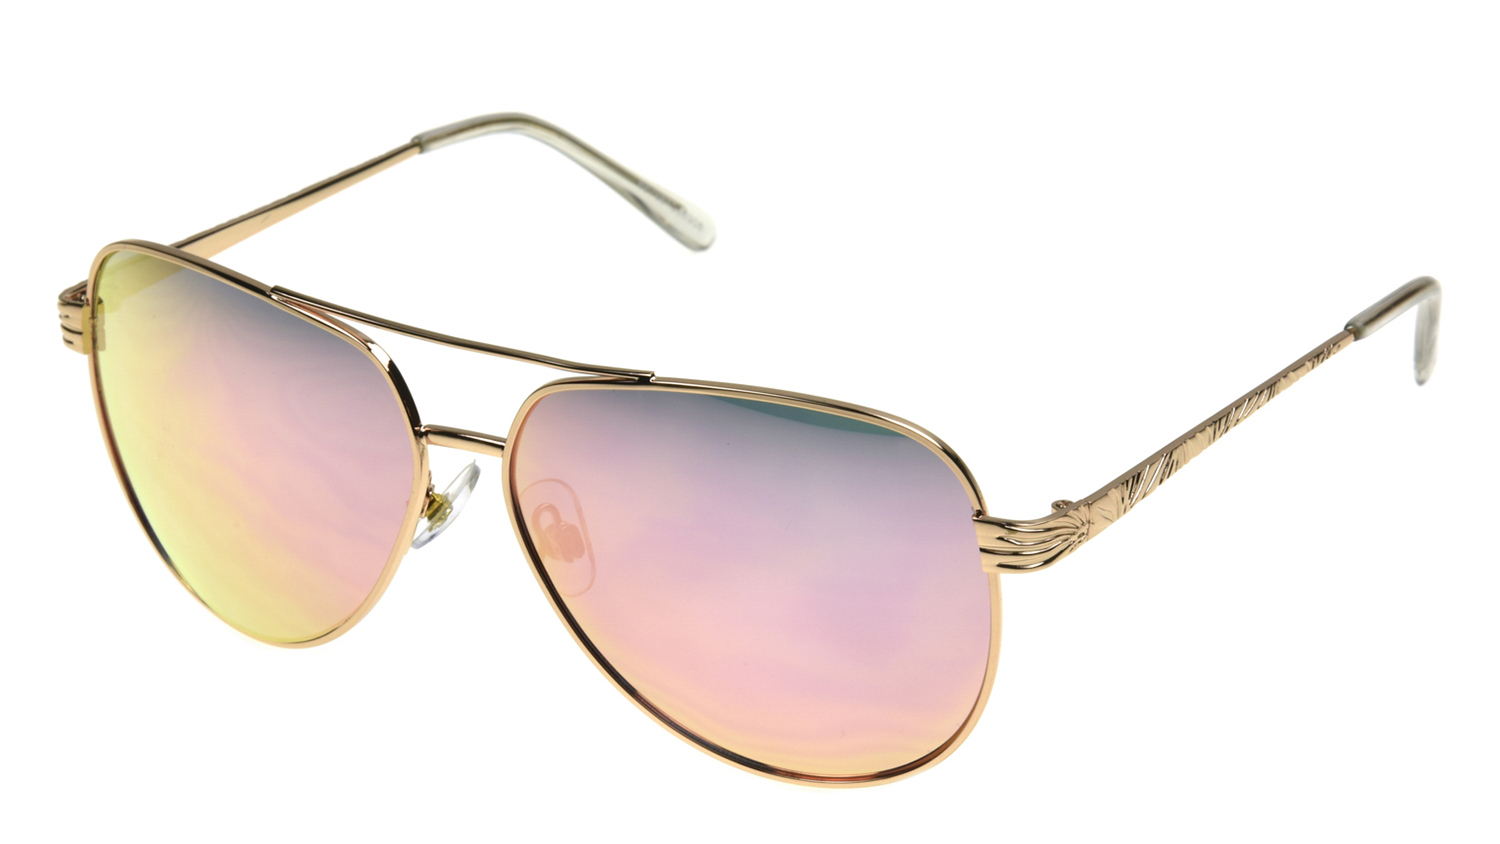 Foster Grant Women's Aviator Fashion Sunglasses Rose Gold - image 2 of 6